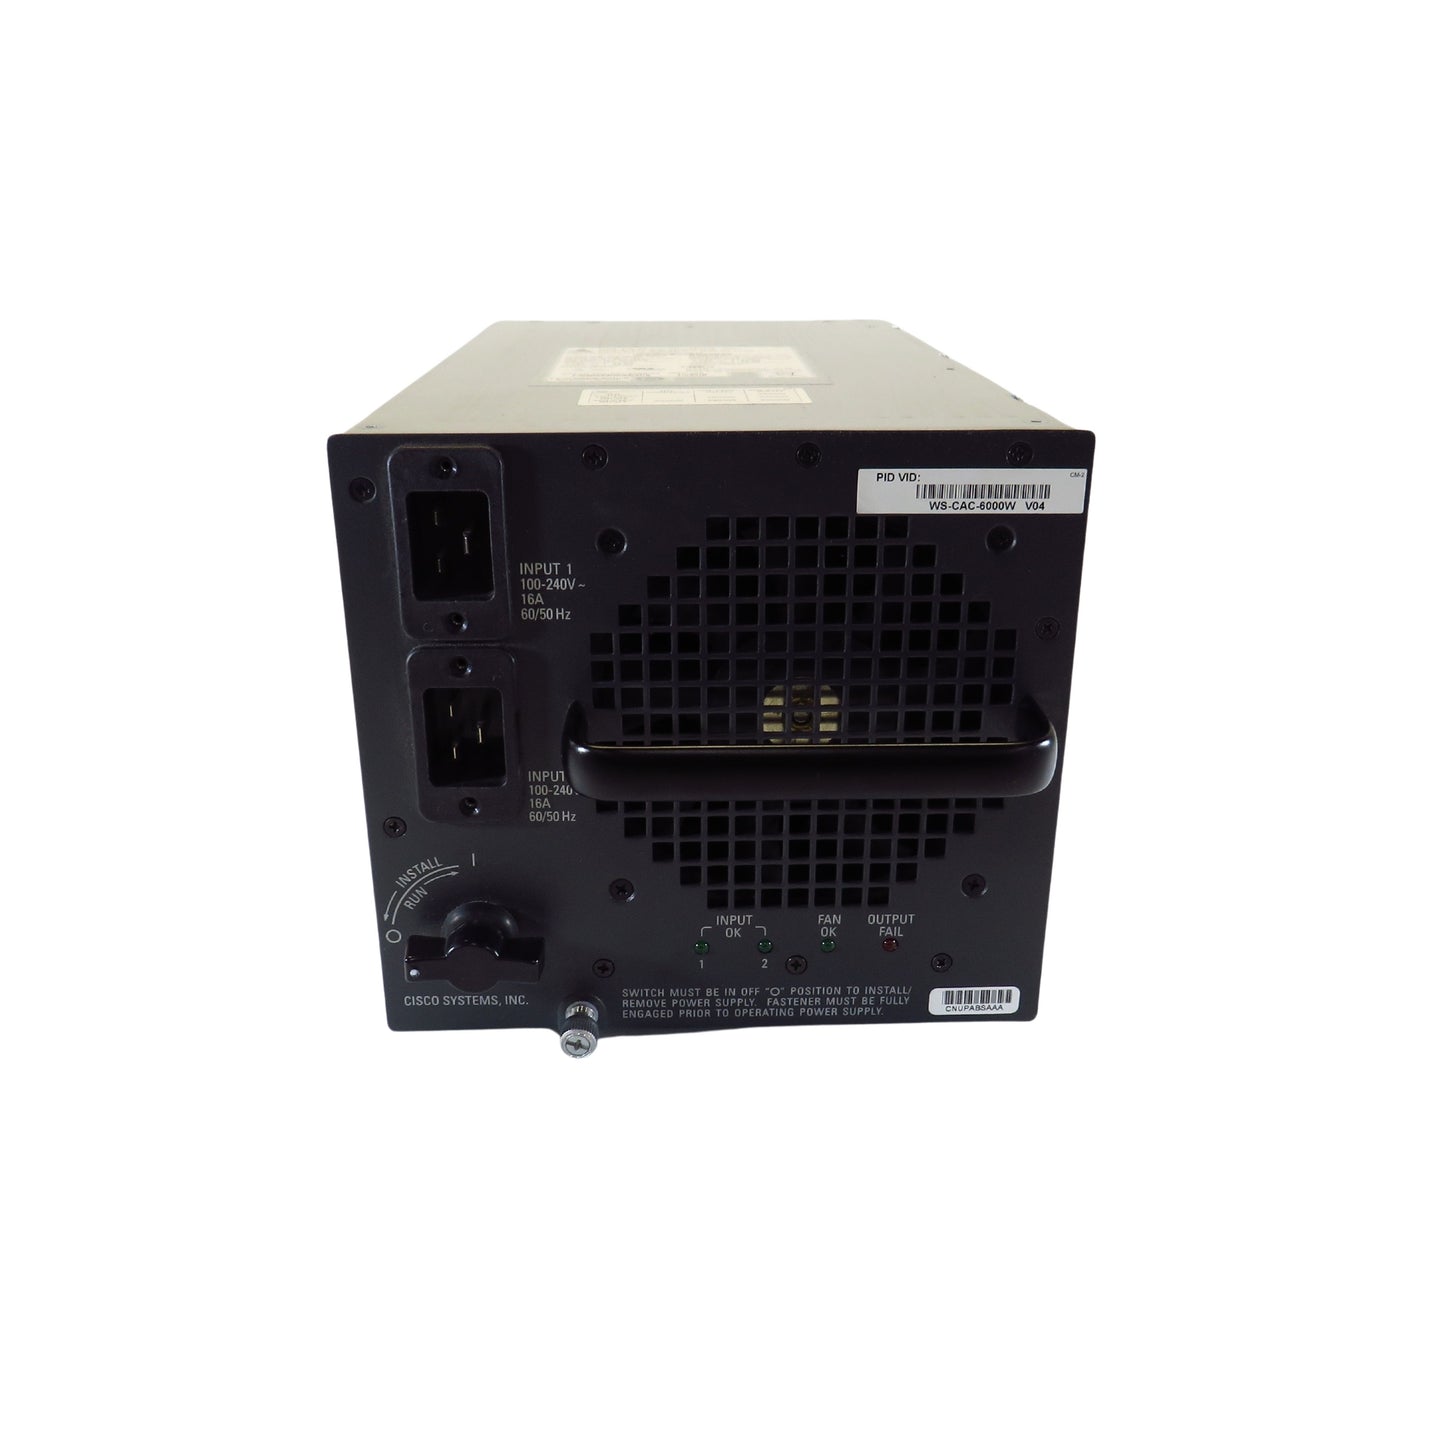 Cisco WS-CAC-6000W Catalyst 6500 Series 6000W AC Power Supply (Refurbished)